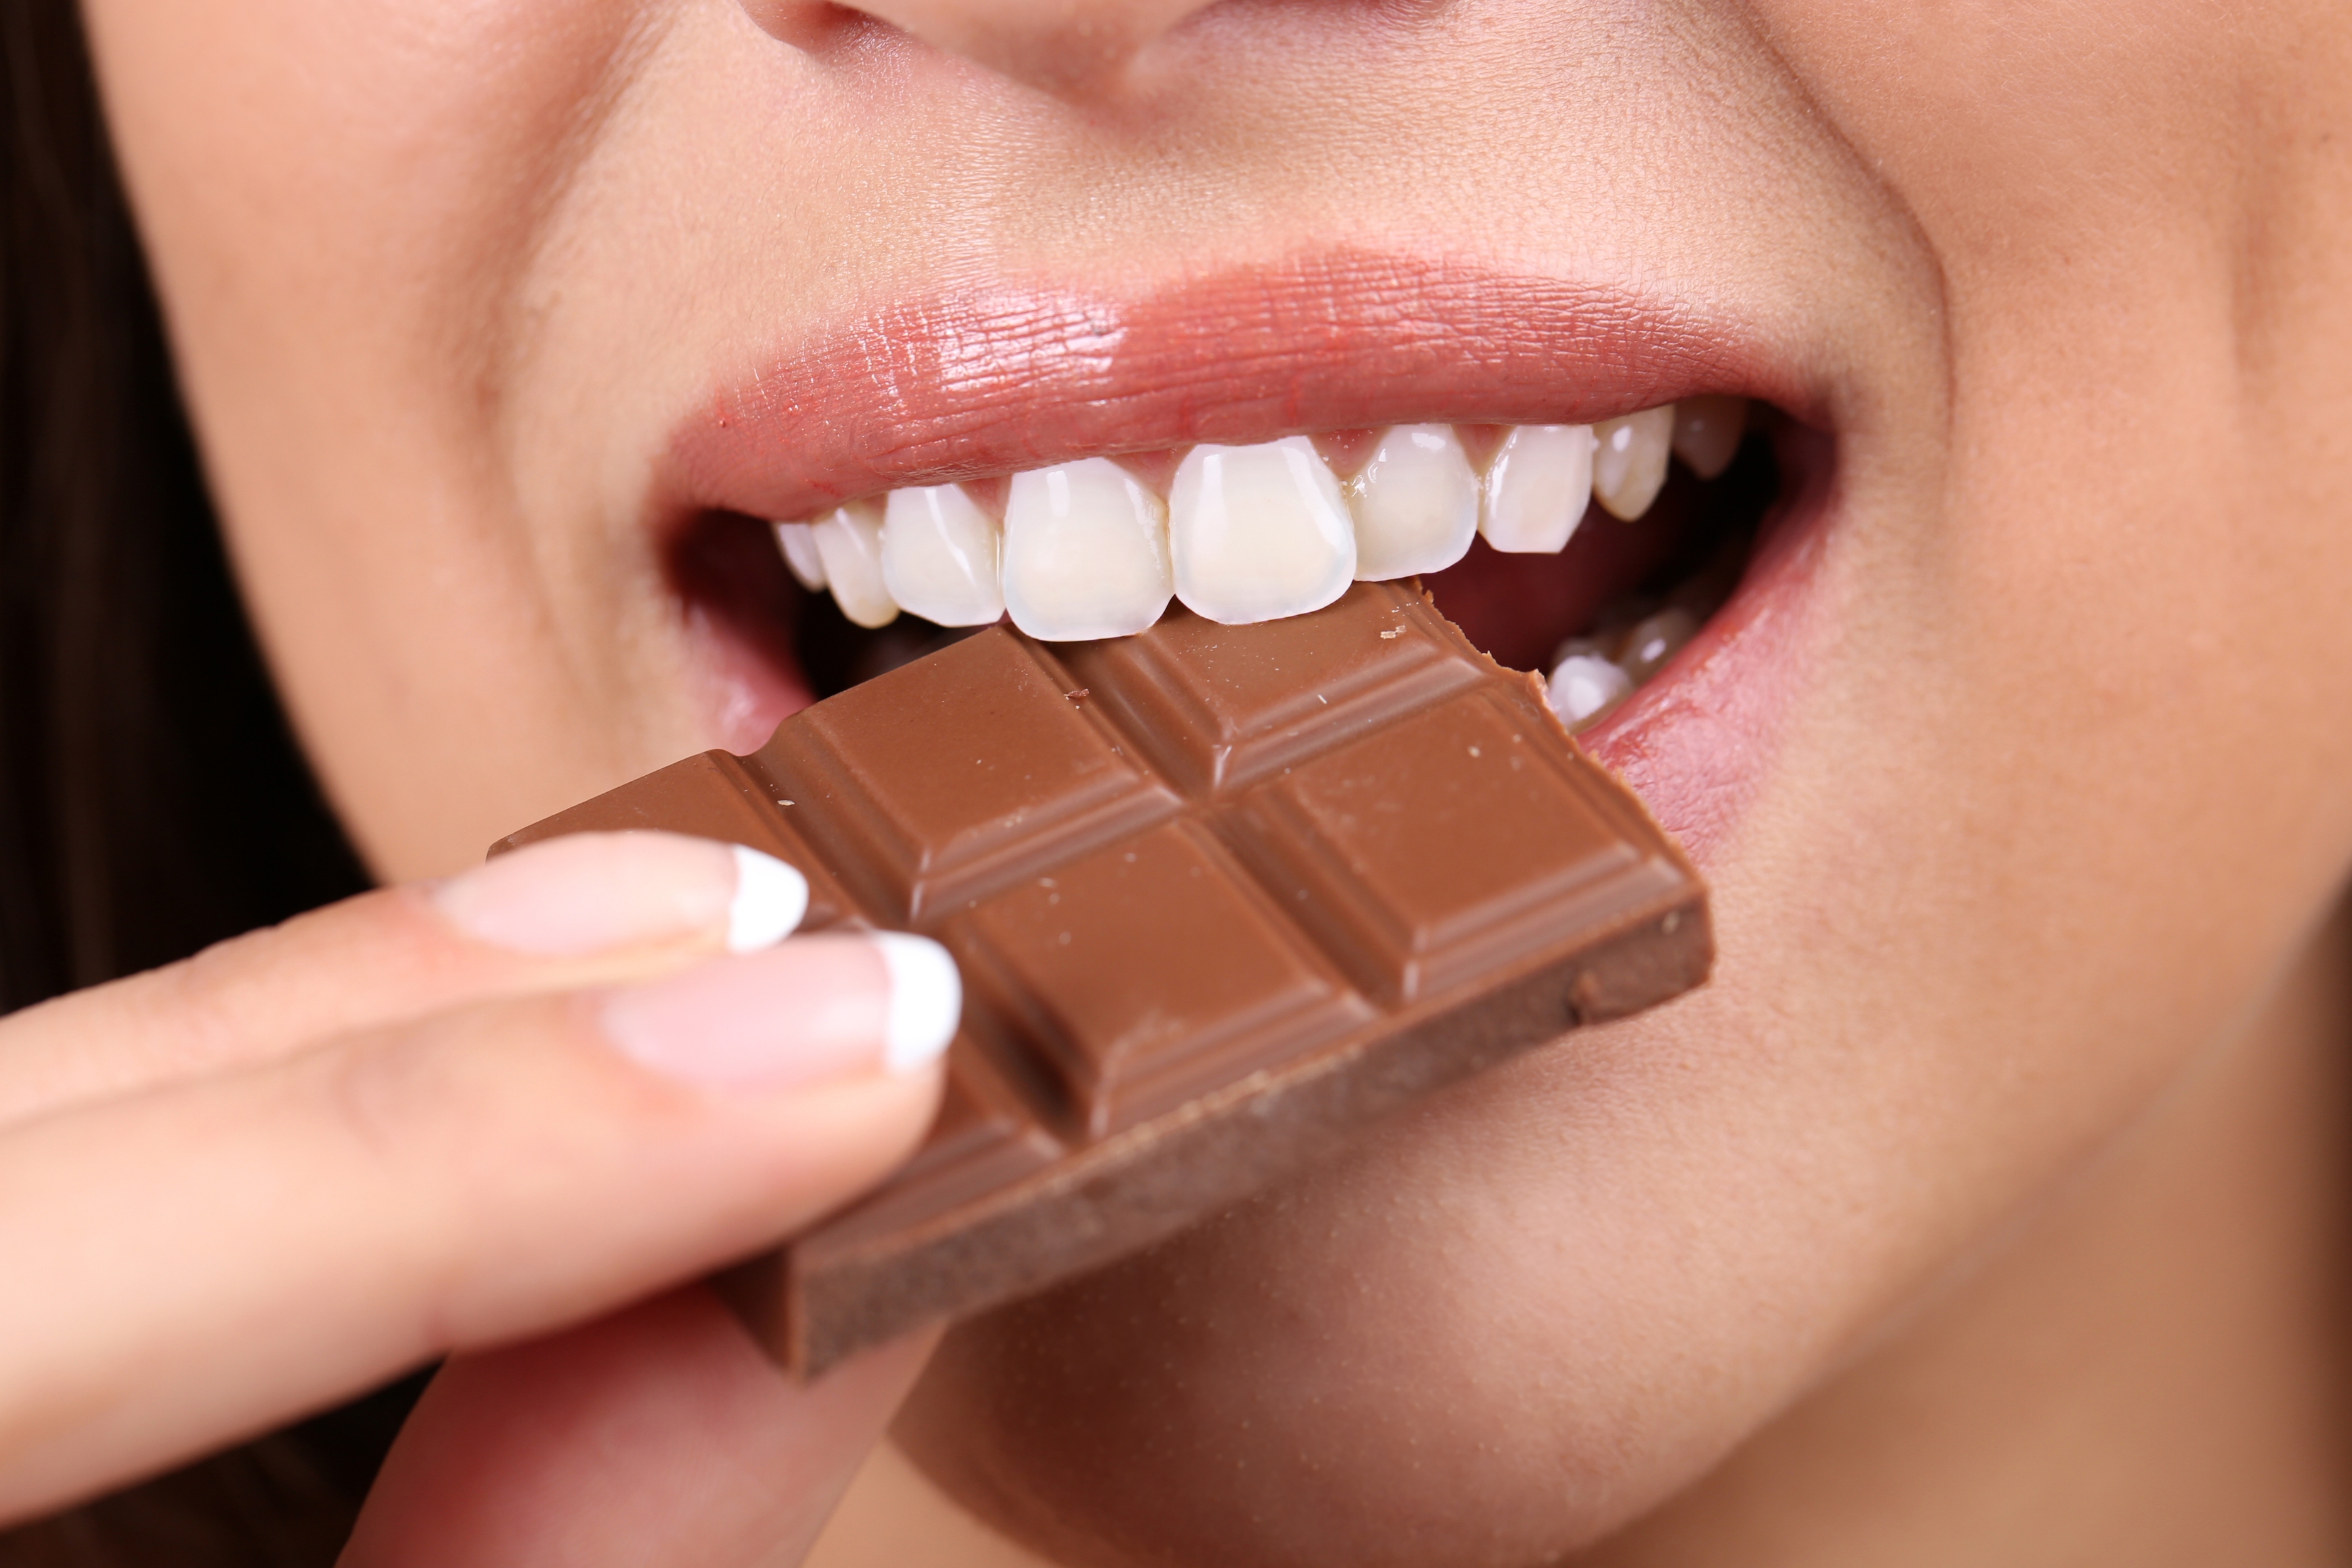 Kι όμως, δεν πρέπει να τρως σοκολάτα για να πάρεις ενέργεια πριν από την προπόνηση - Δες γιατί